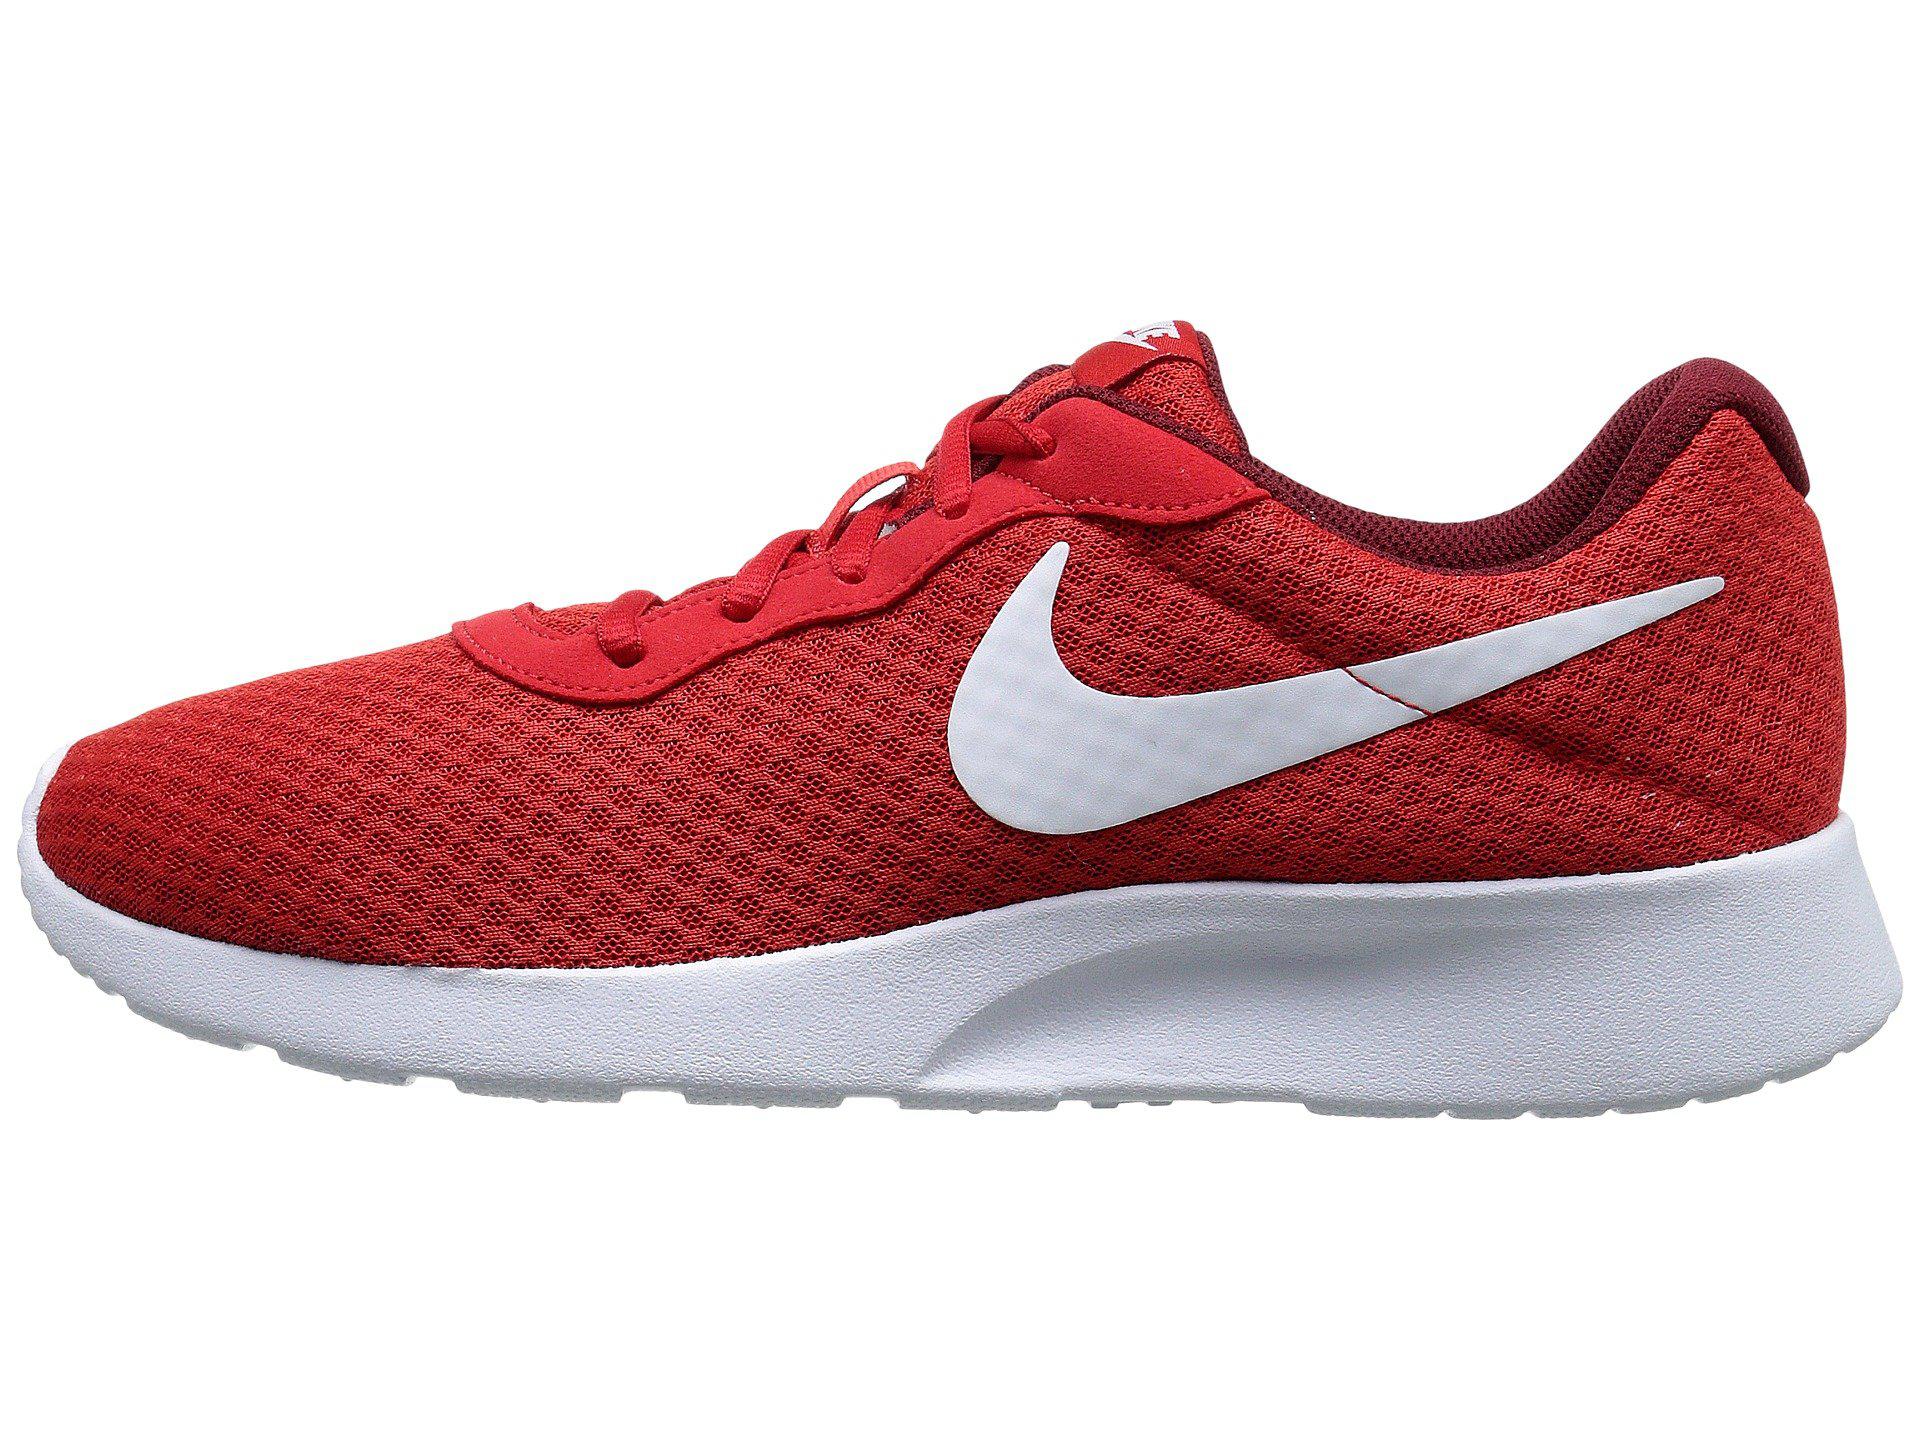 Nike Tanjun' Running Shoes in Red for Men - Lyst